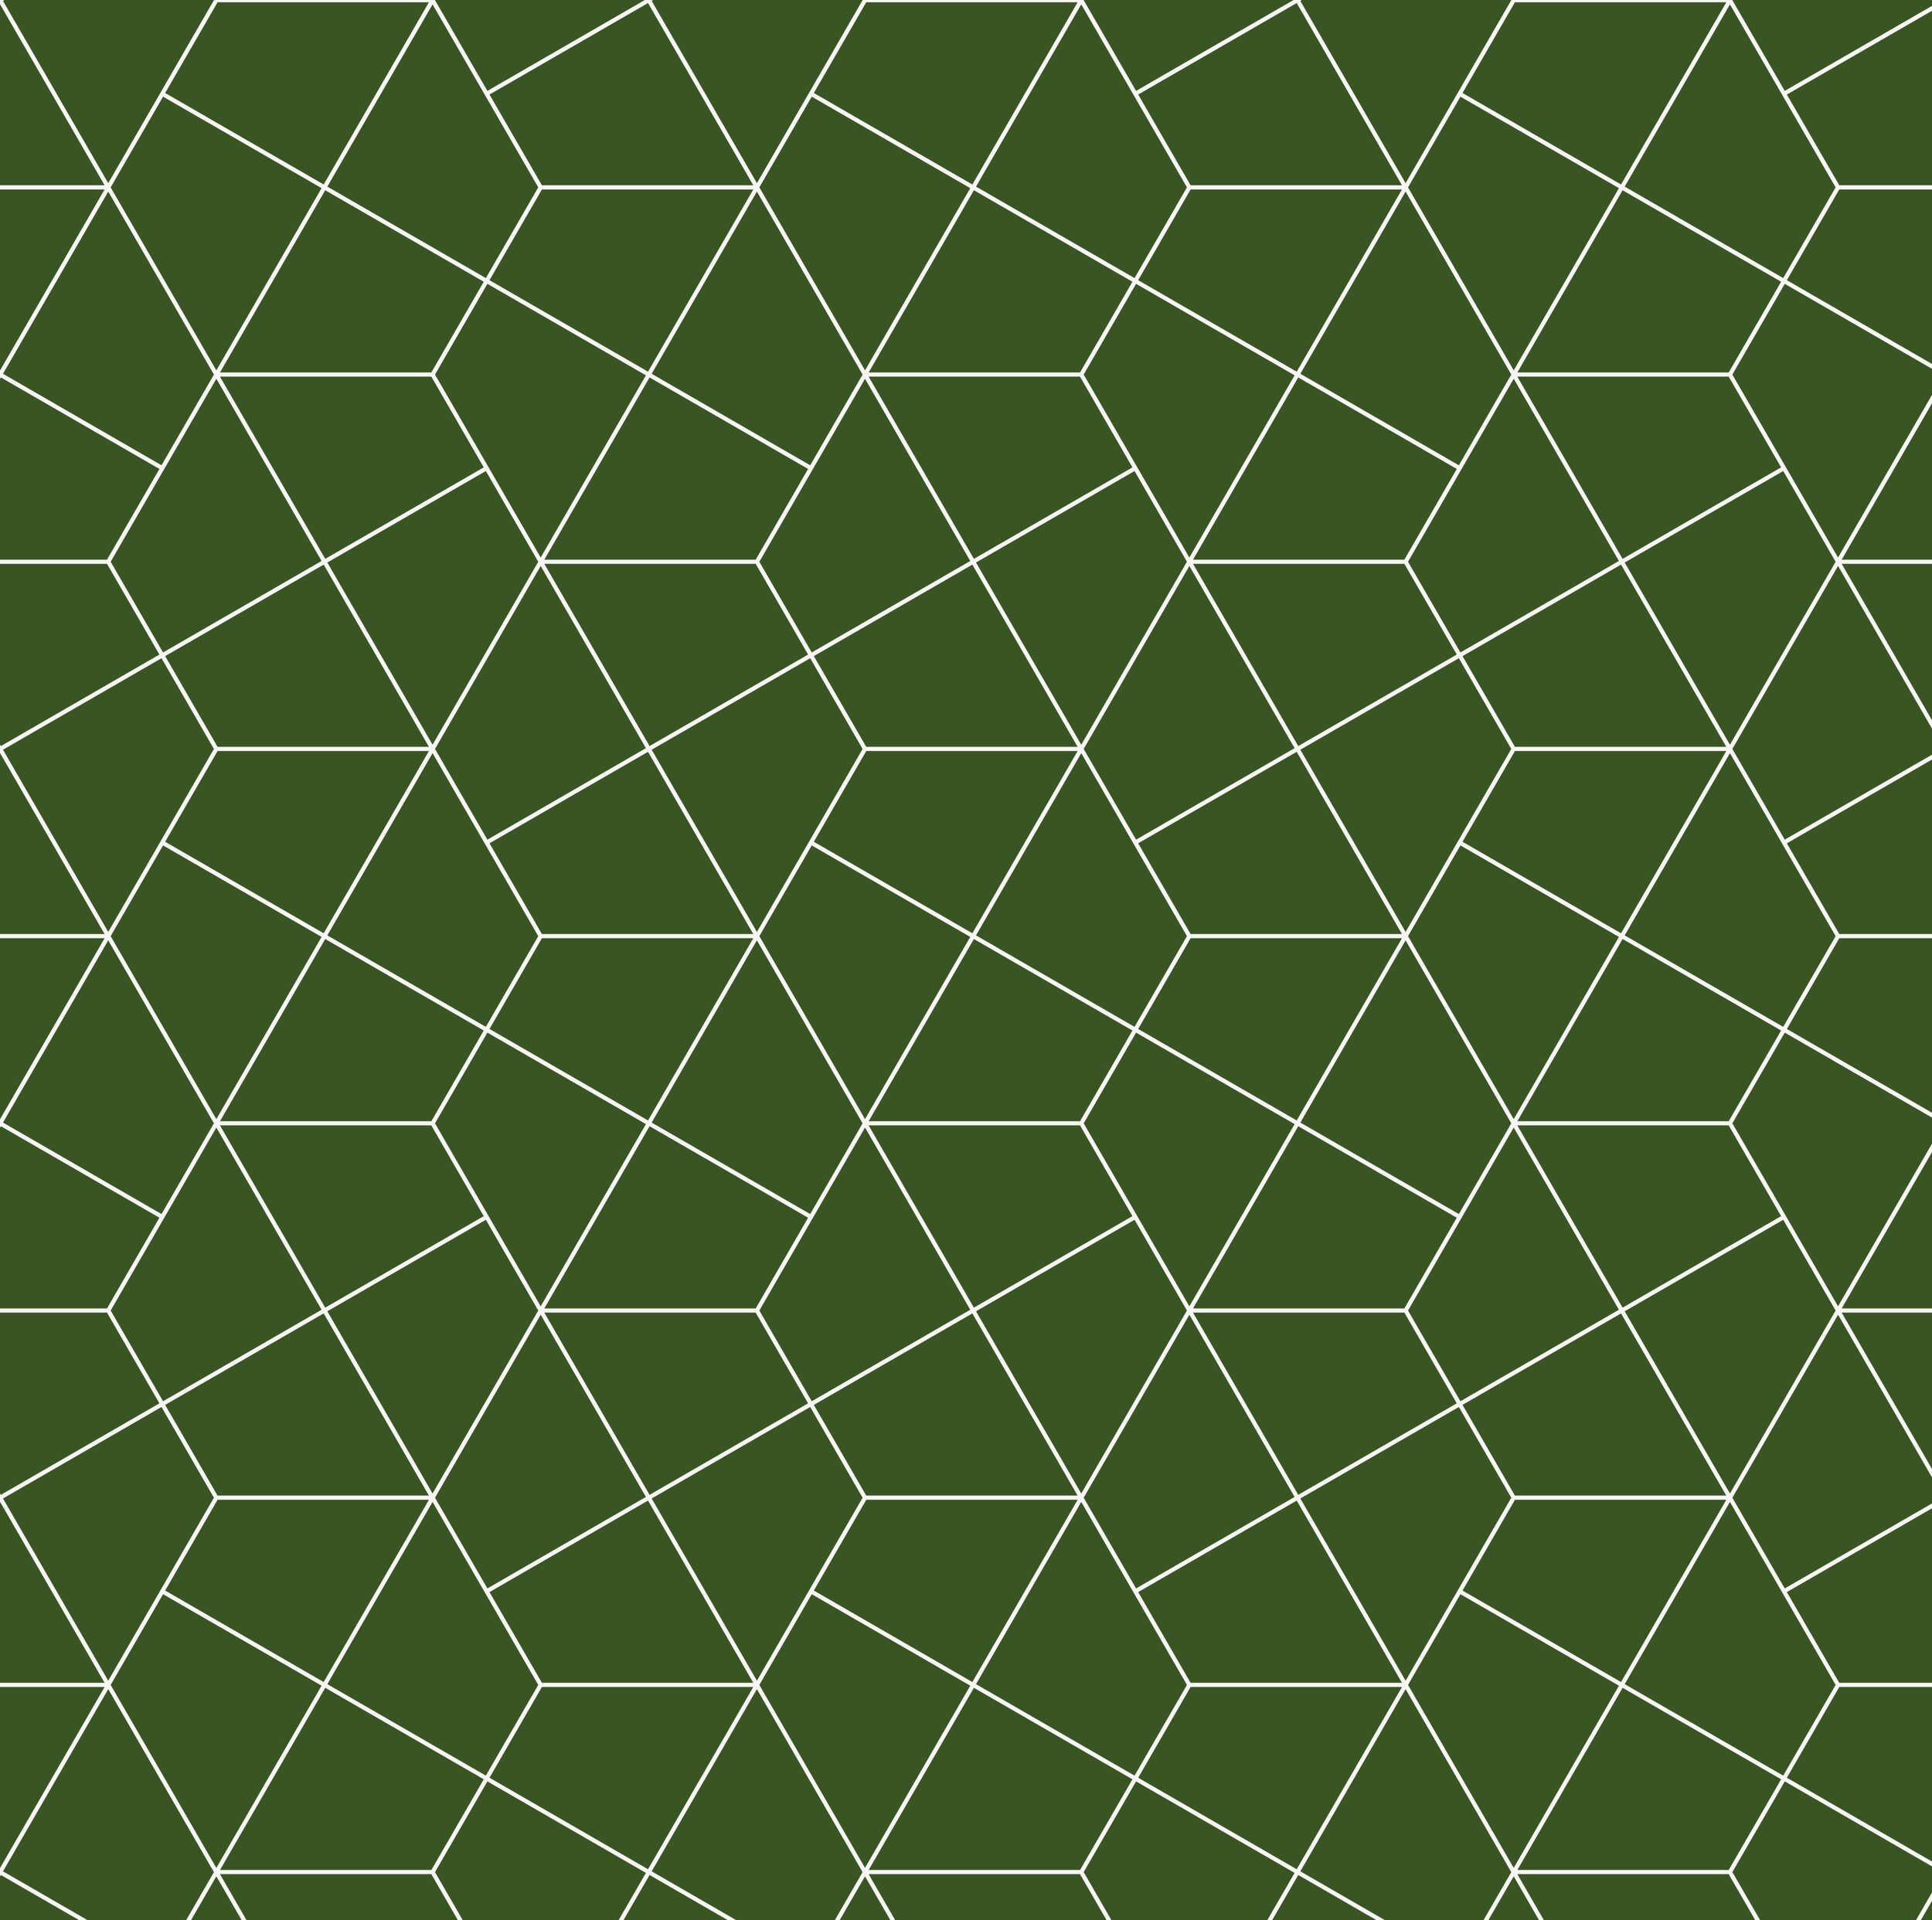 Duncan & Potts Law Firm Branding Geometric Green Pattern.jpg